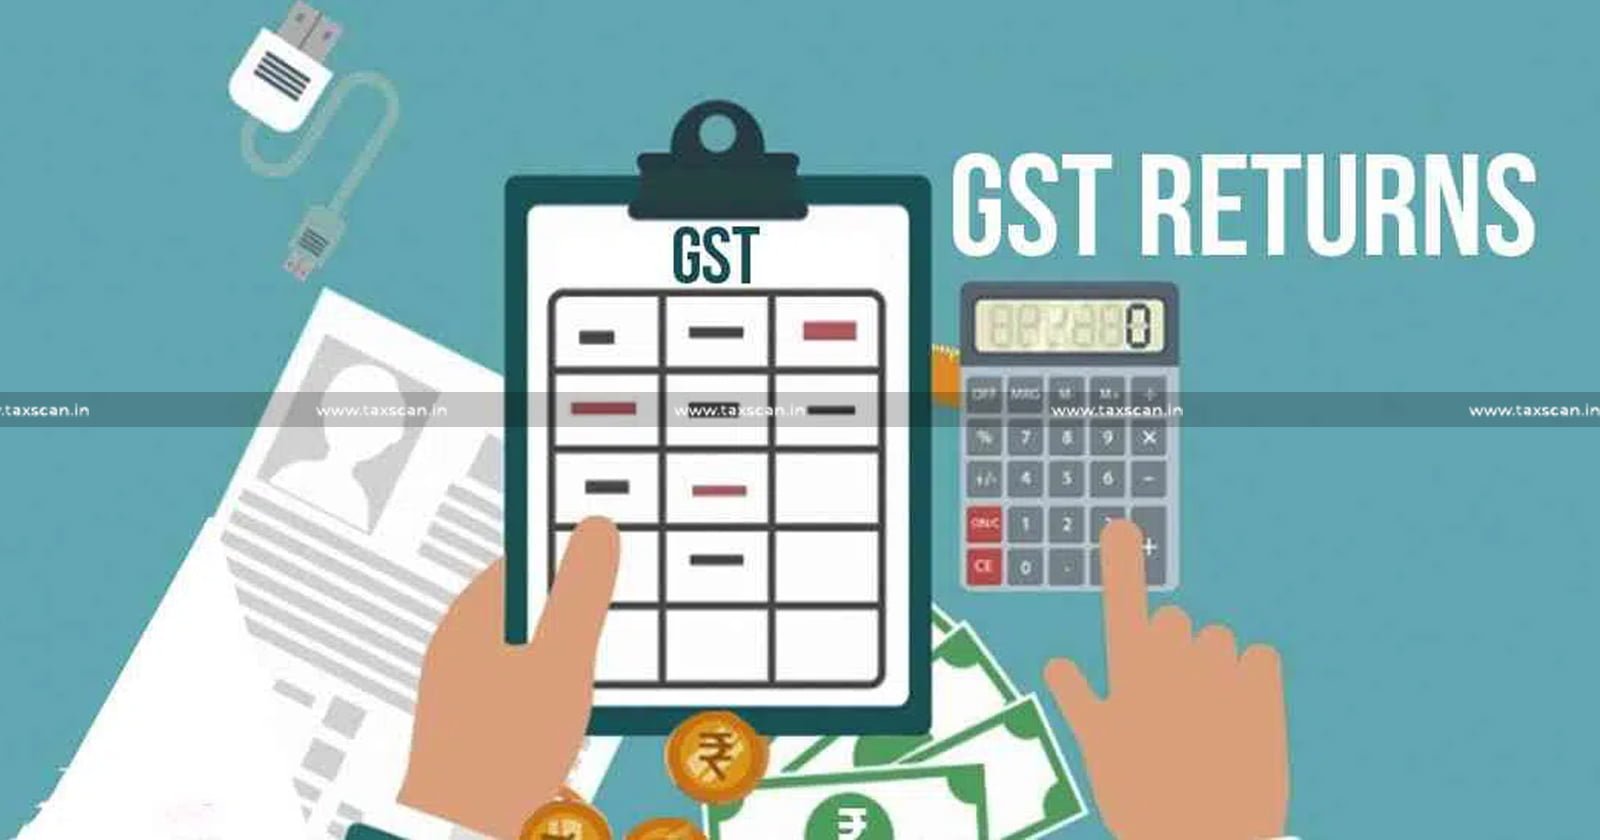 GST Registration Cancelled - GST - GST Return - Health Issues - Madras Highcourt - File Return - taxscan